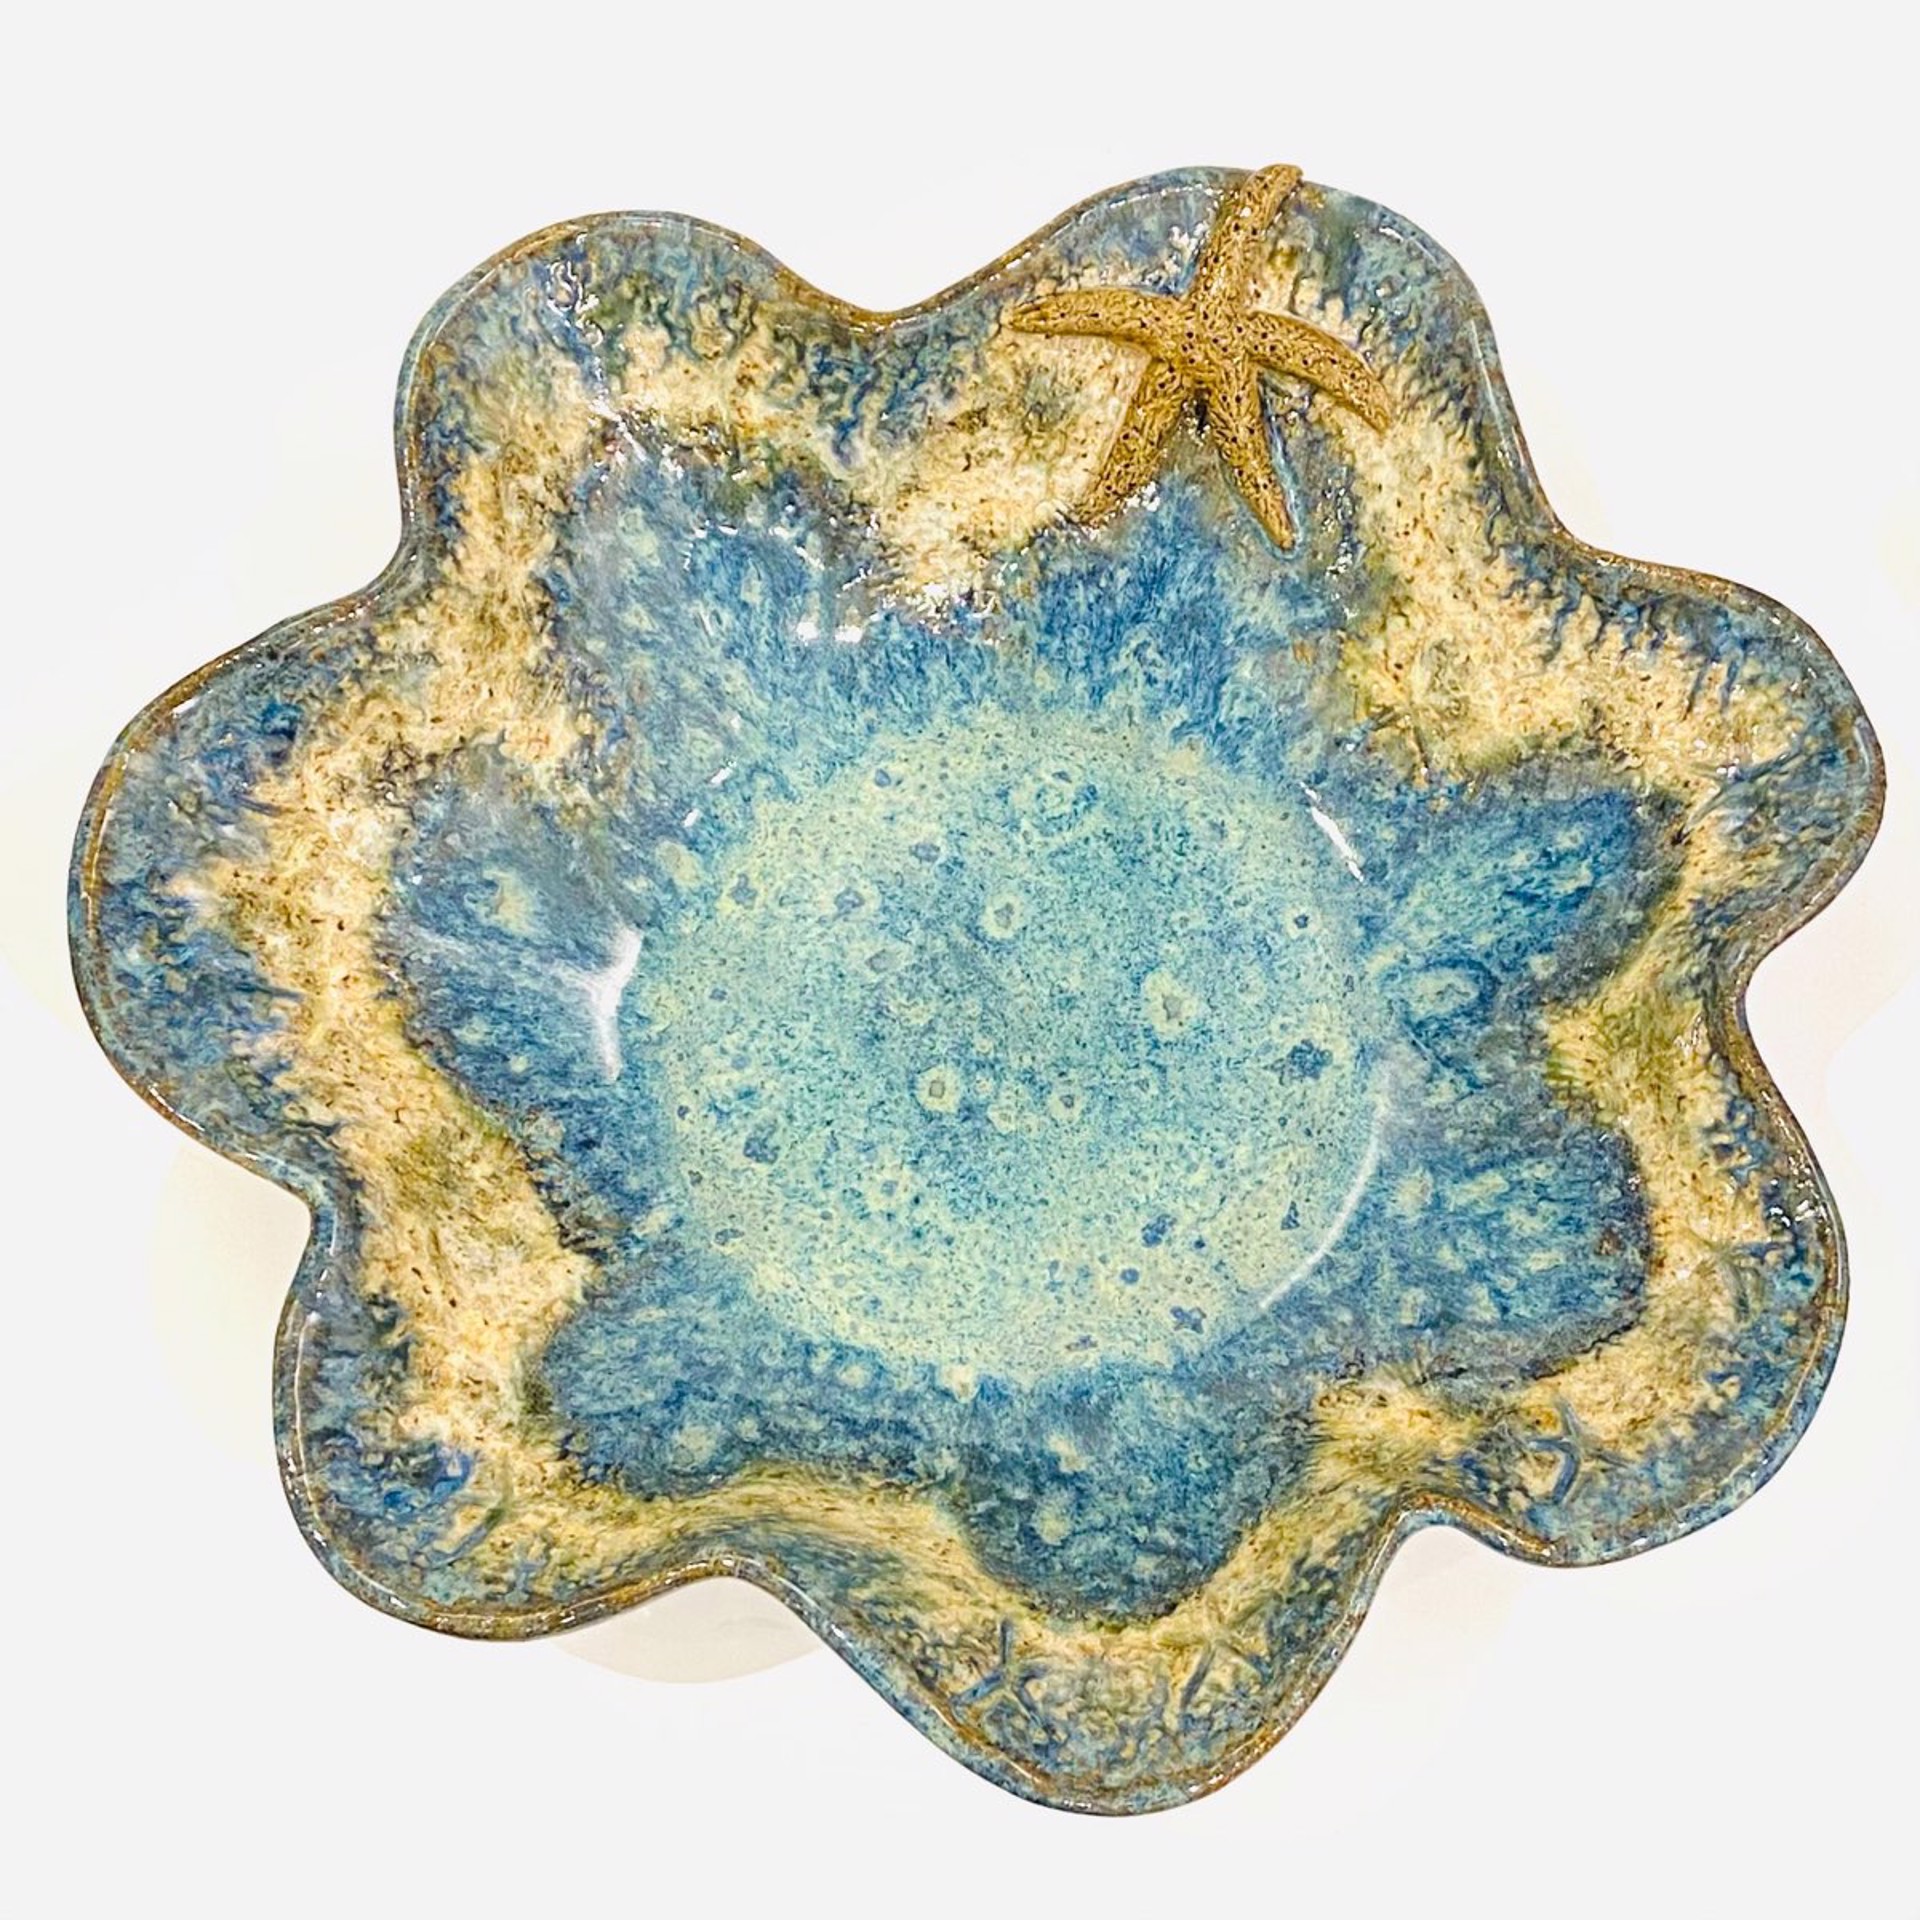 LG22-933 Large Round Scalloped Bowl with Starfish (Blue Glaze) by Jim & Steffi Logan